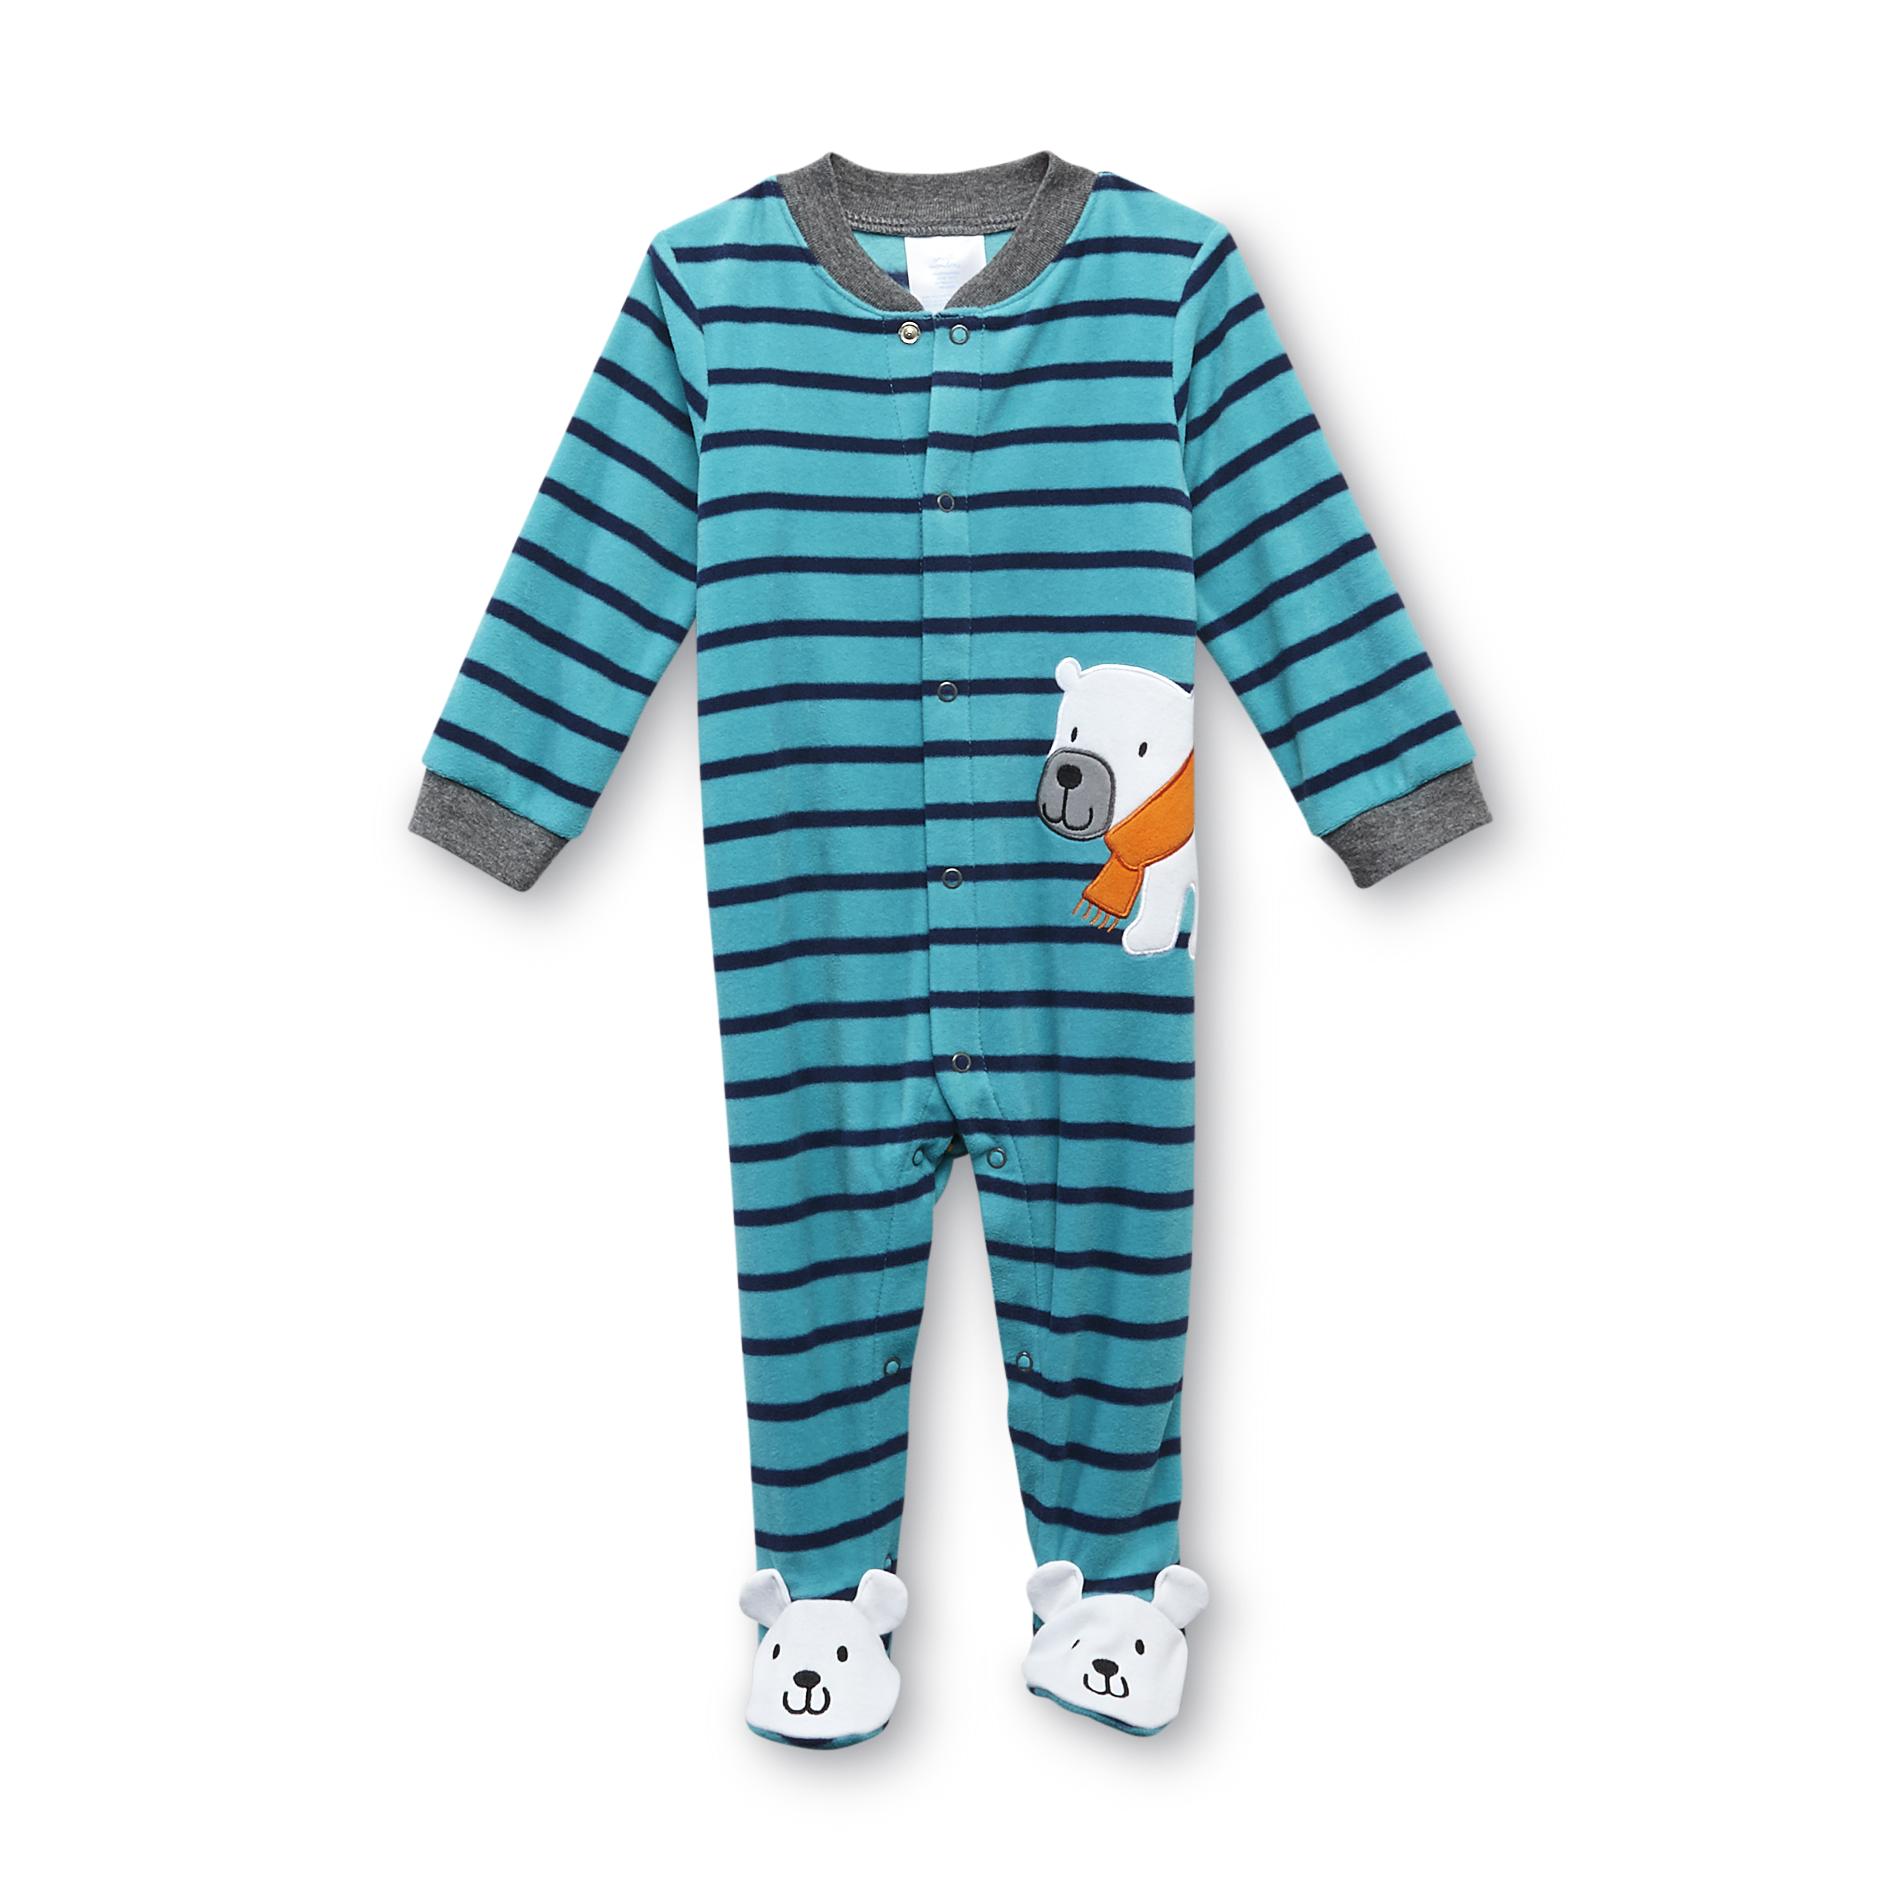 Small Wonders Newborn Boy's Microfleece Footed Sleeper Pajamas